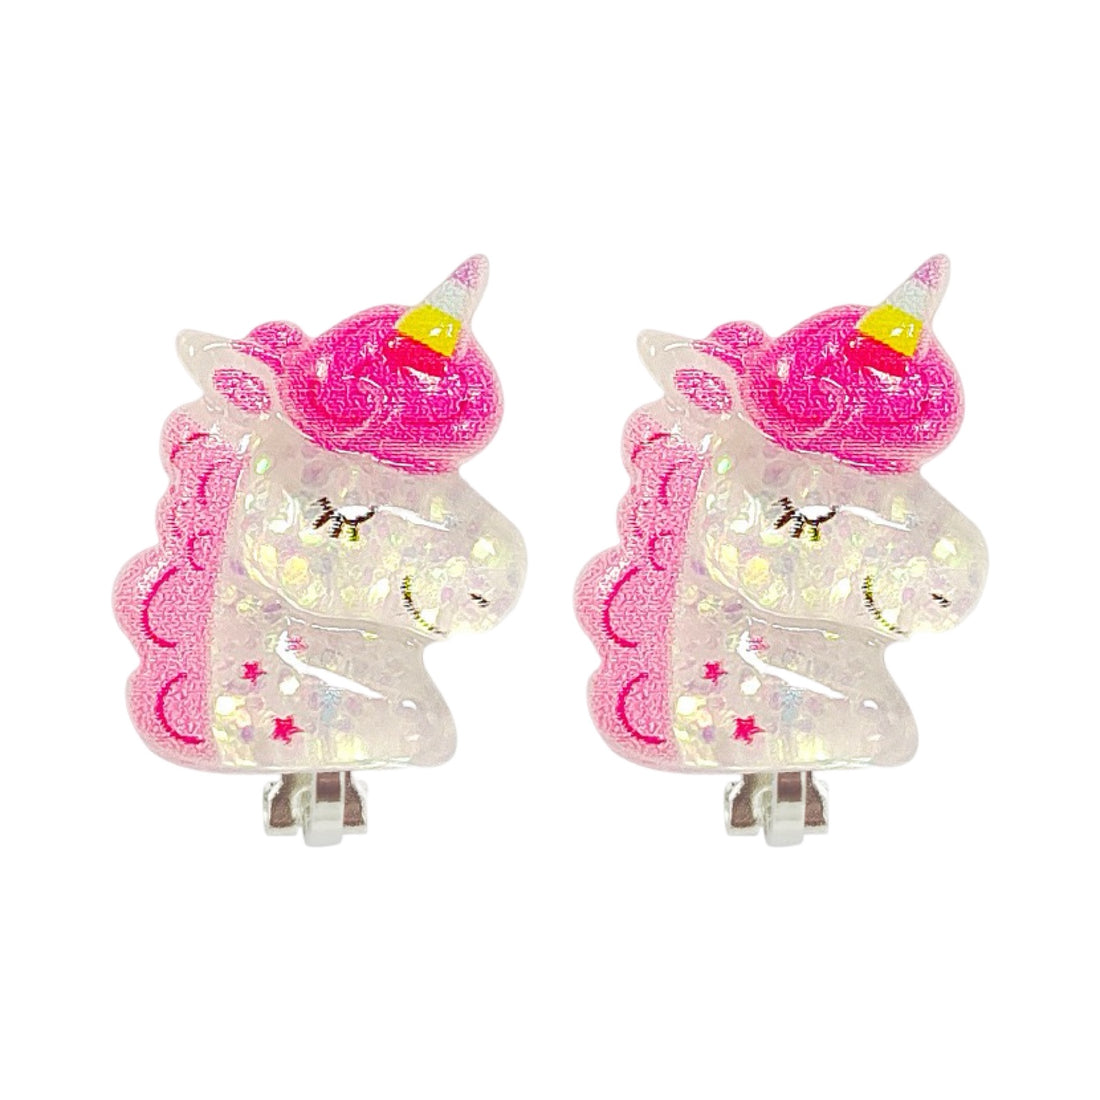 Clip earrings: Pink unicorns